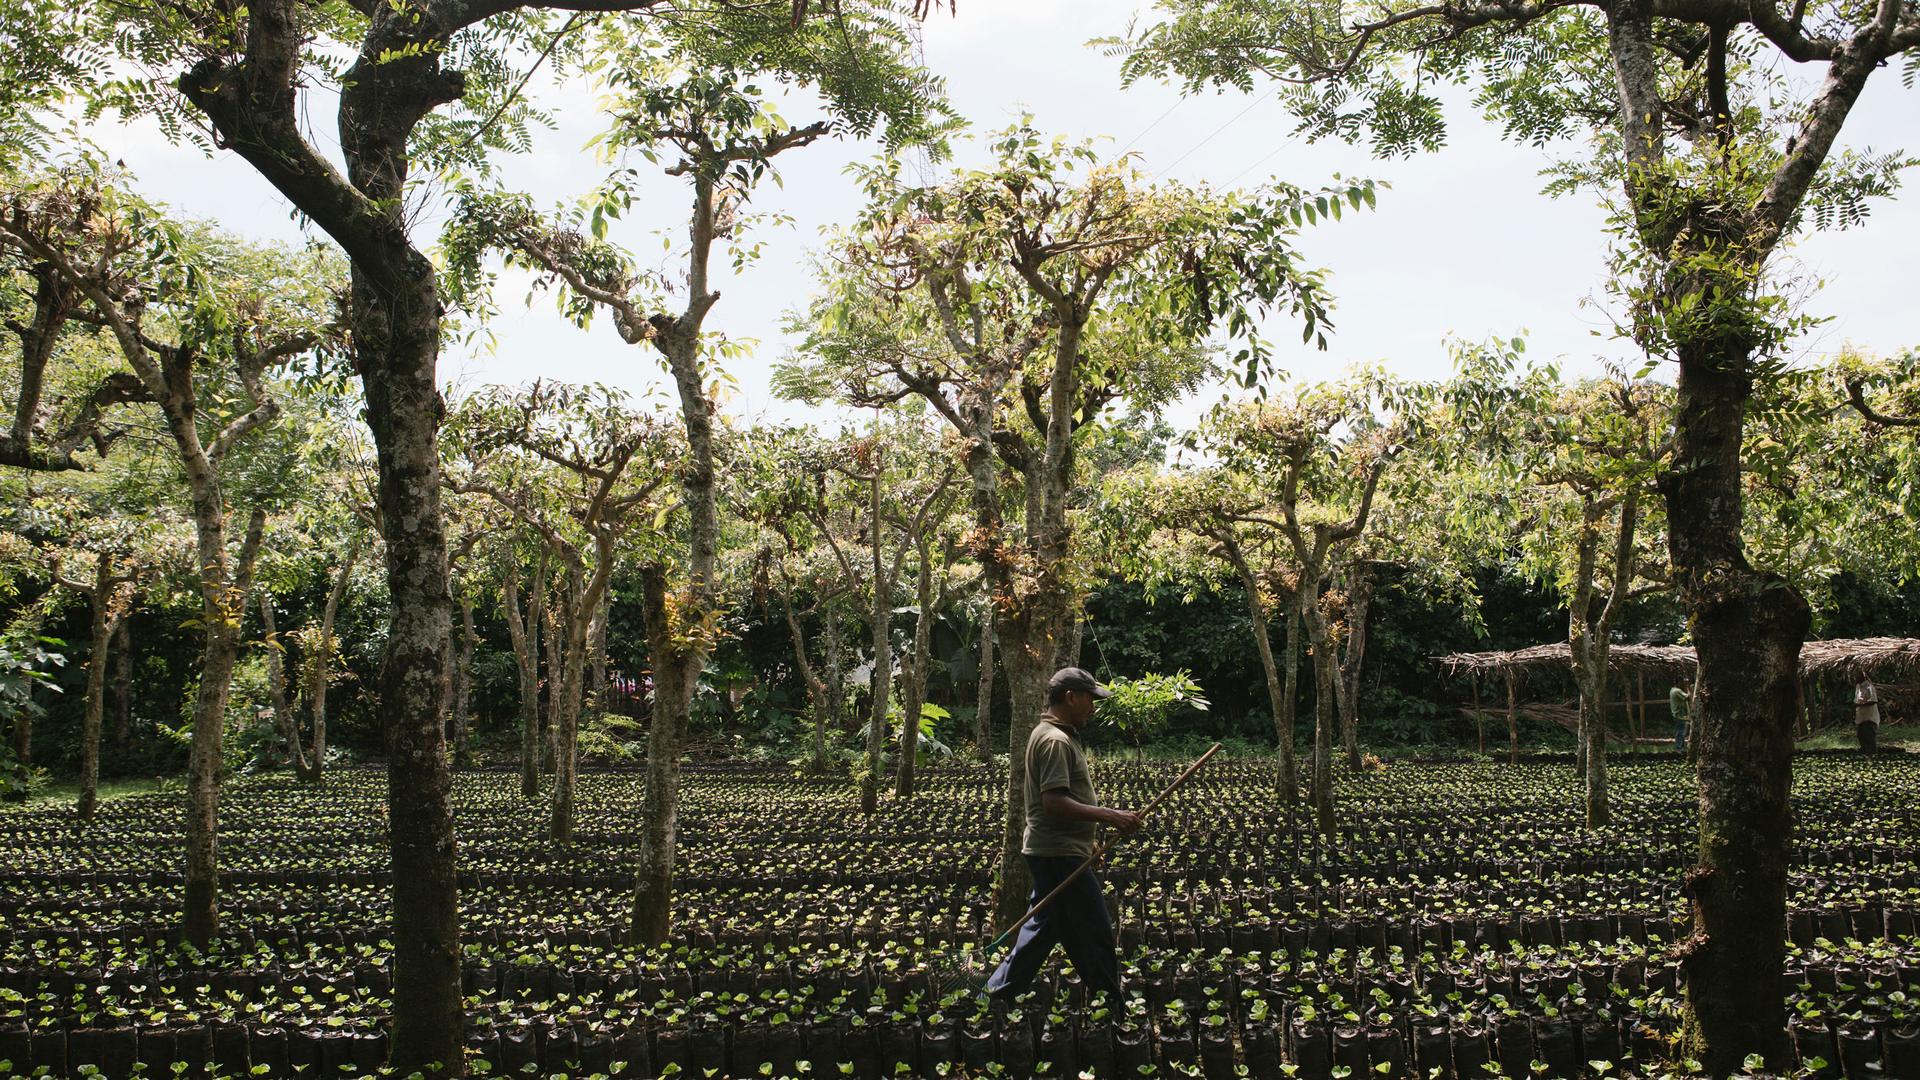 A coffee farmer is shown walking through a nursery with a rake in his hand.